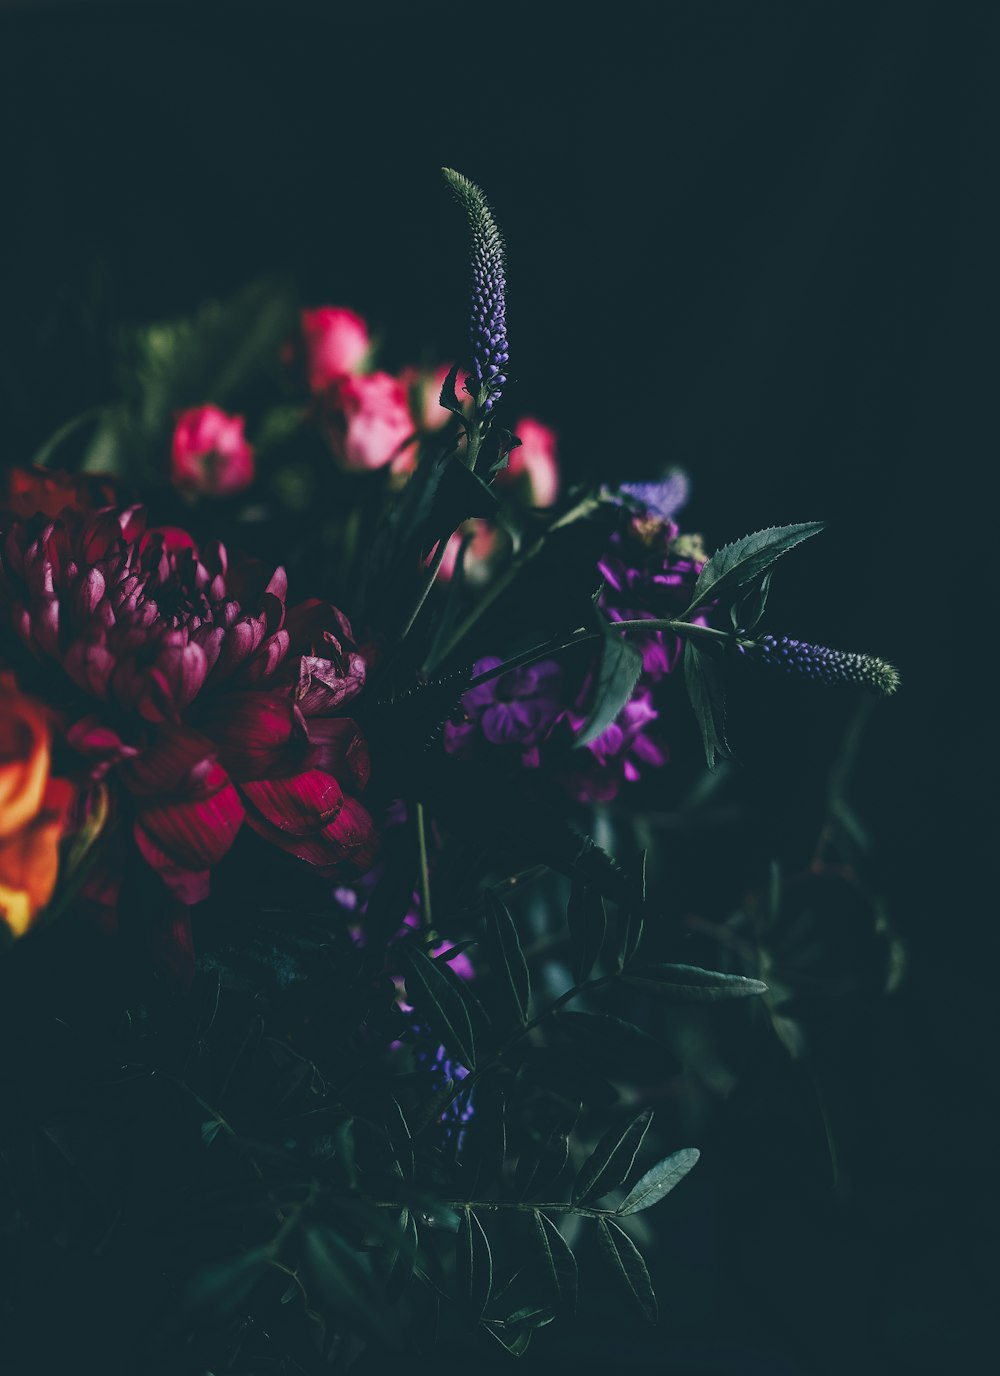 fotografia de foco raso de flores